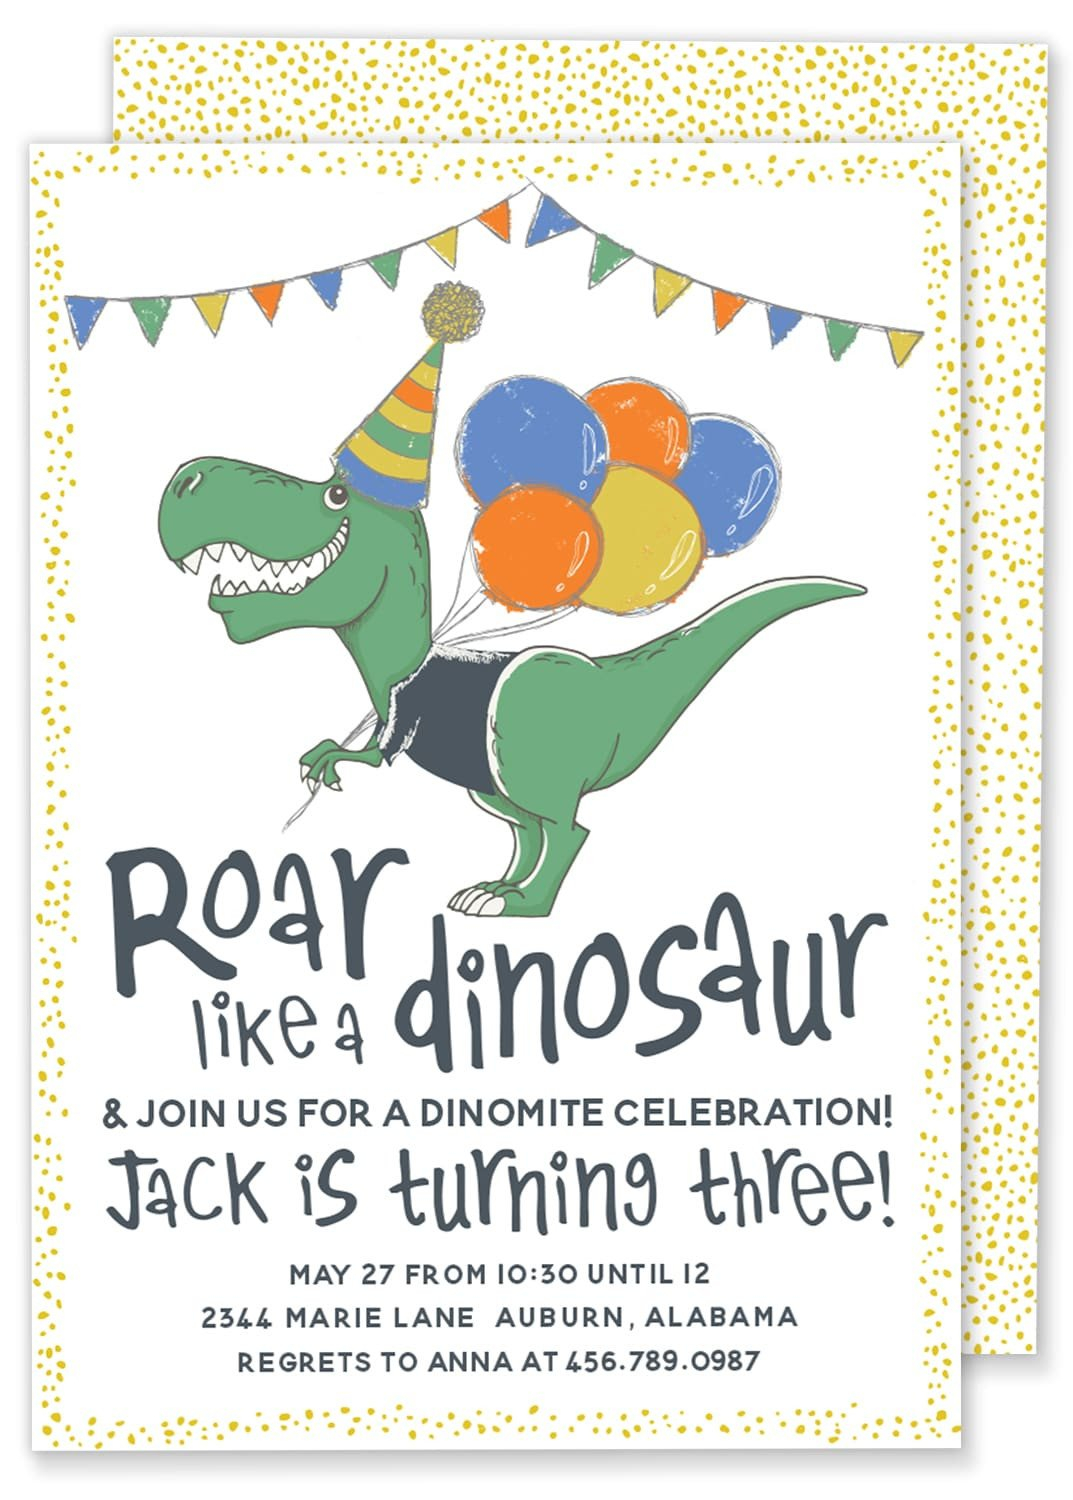 Dinosaur Train Birthday Party Invitations Australia Themed Girl throughout sizing 1073 X 1500